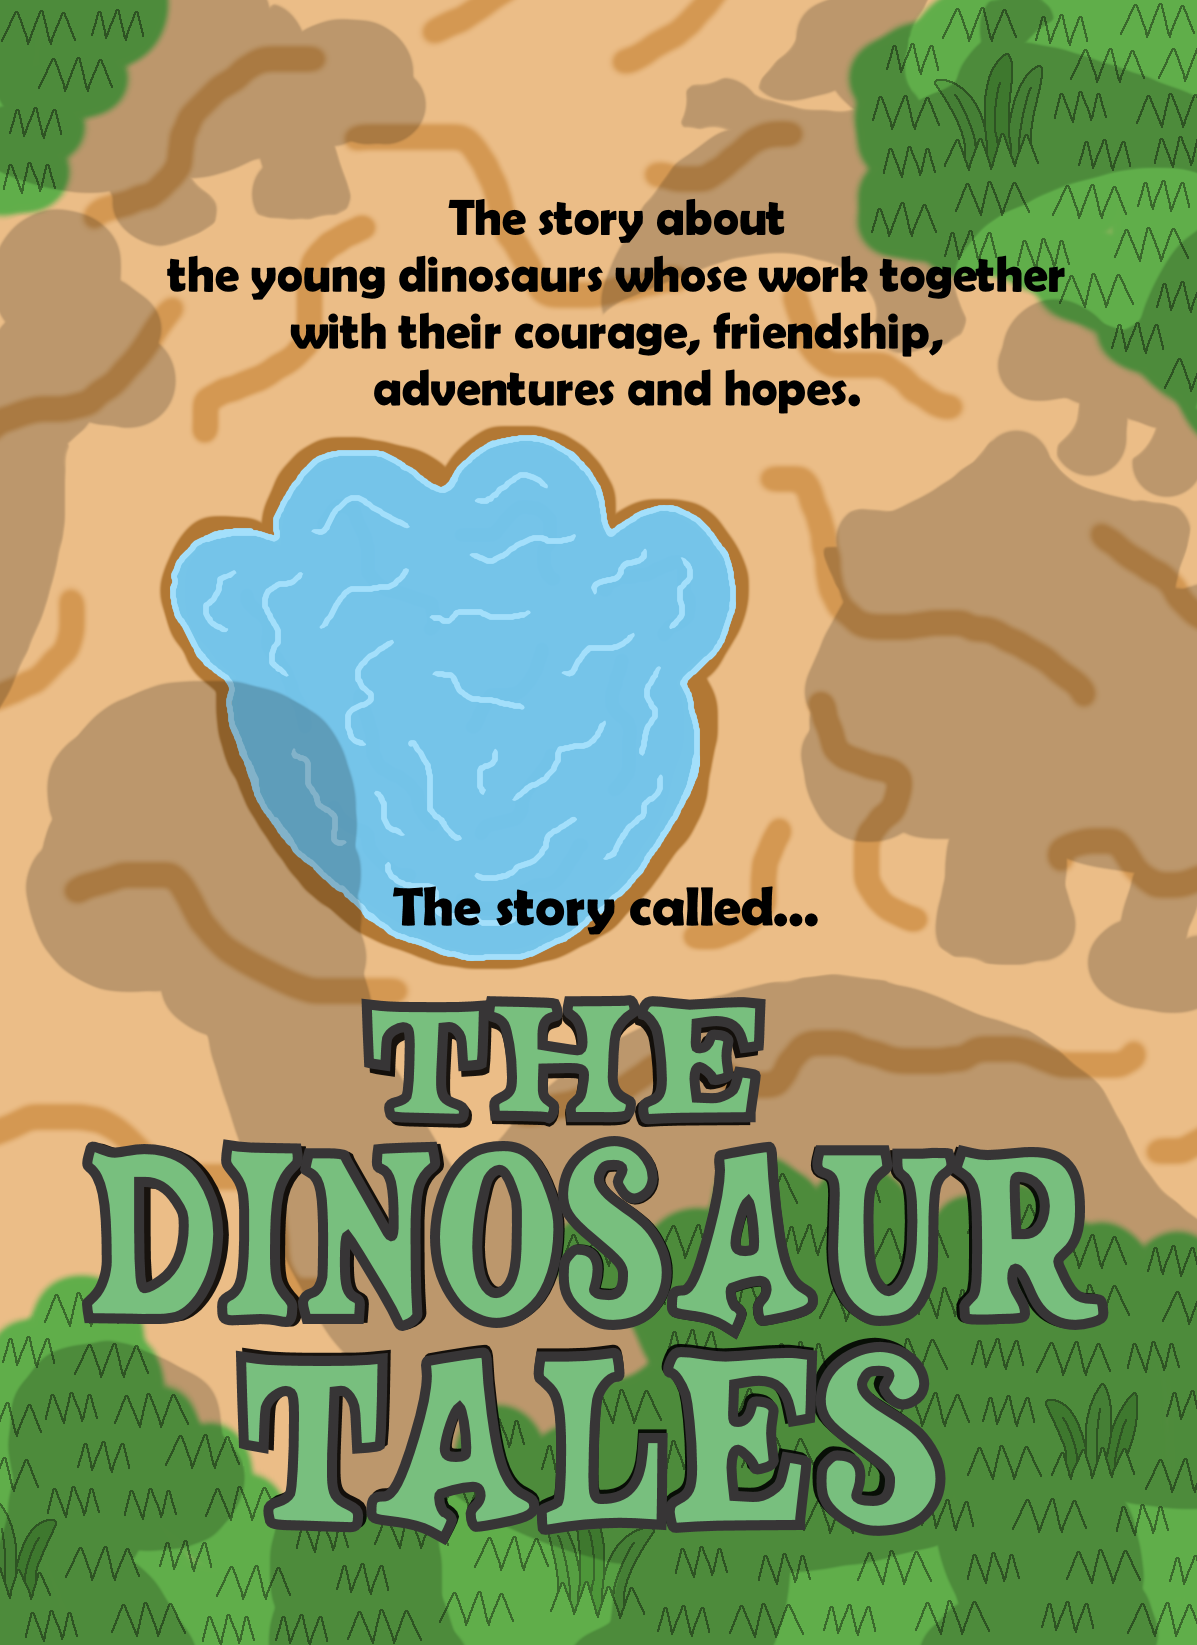 Dinosaur Friends Poster